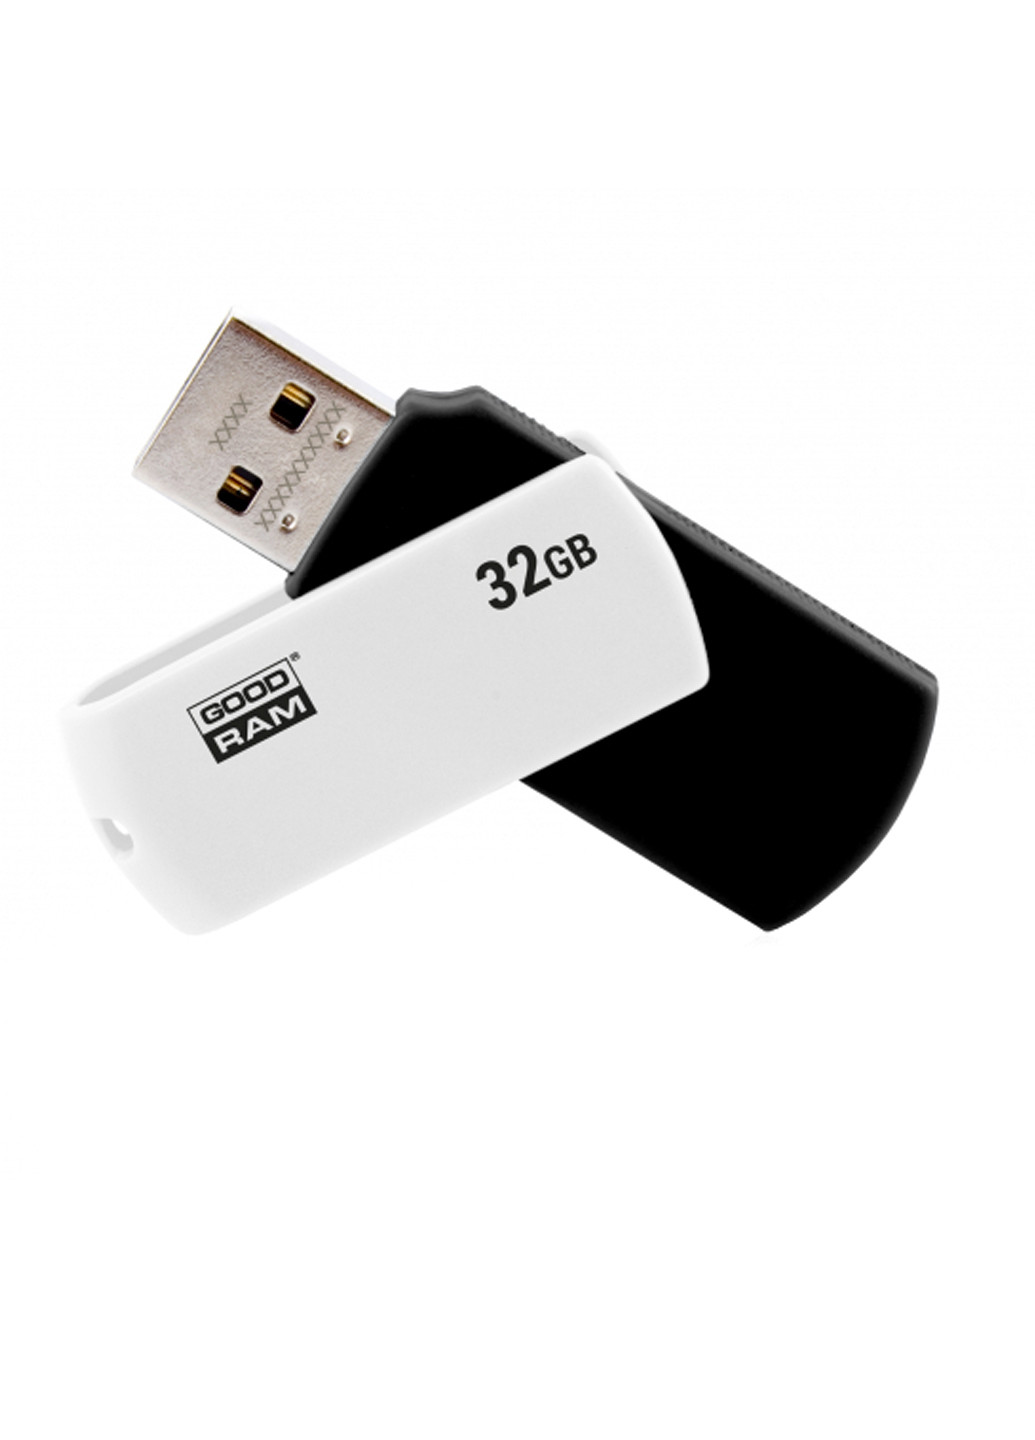 Флеш пам'ять USB 32GB UCO2 USB 2.0 Colour Black & White (UCO2-0320KWR11) Goodram флеш память usb goodram 32gb uco2 usb 2.0 colour black&white (uco2-0320kwr11) (136742749)